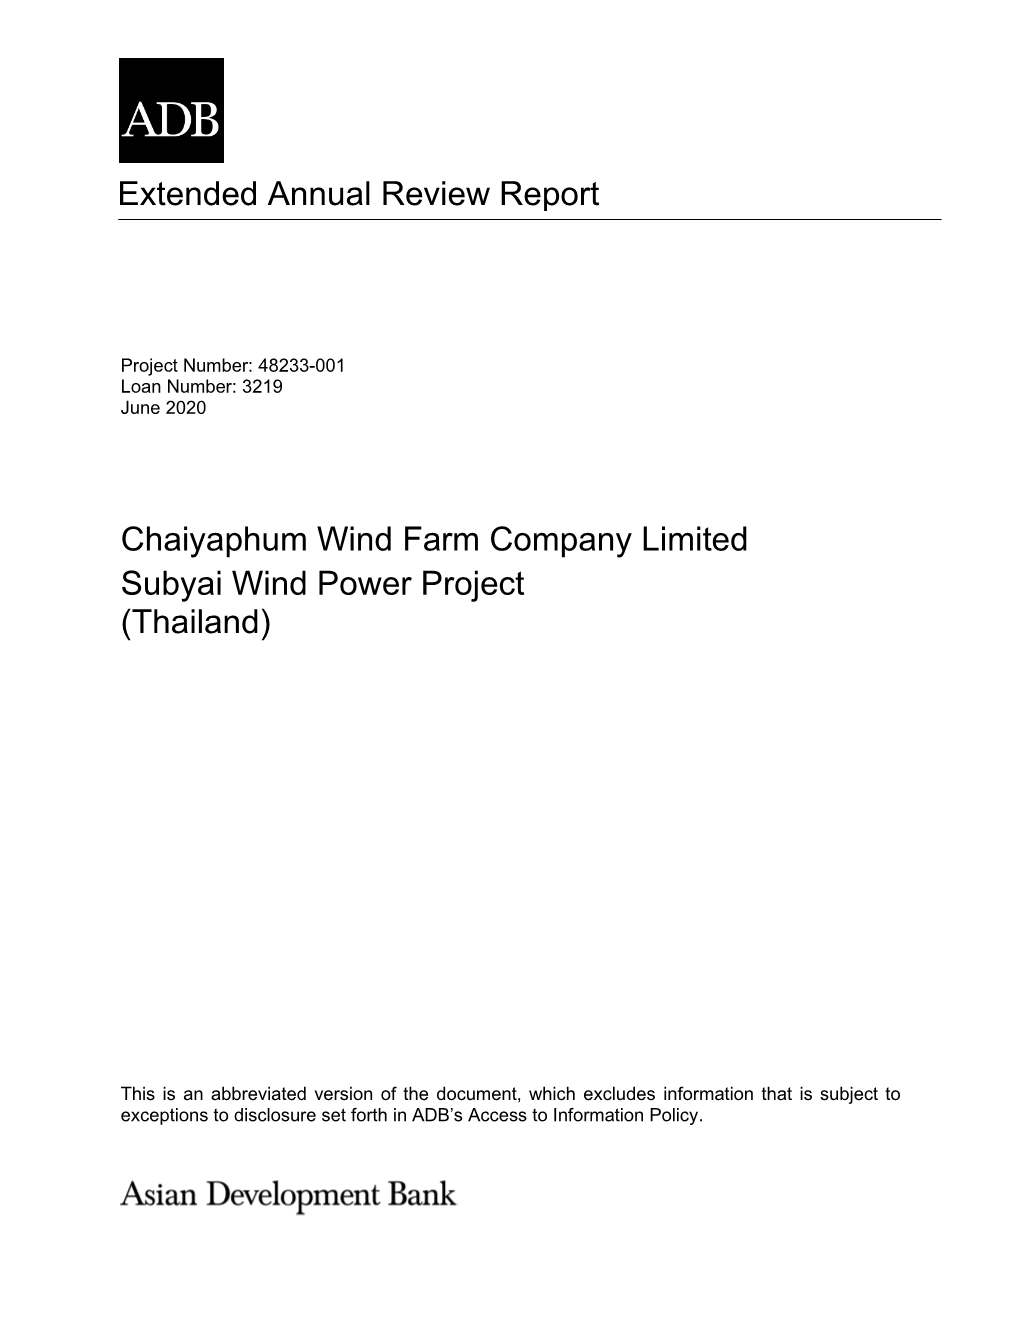 Subyai Wind Power Project (Thailand)